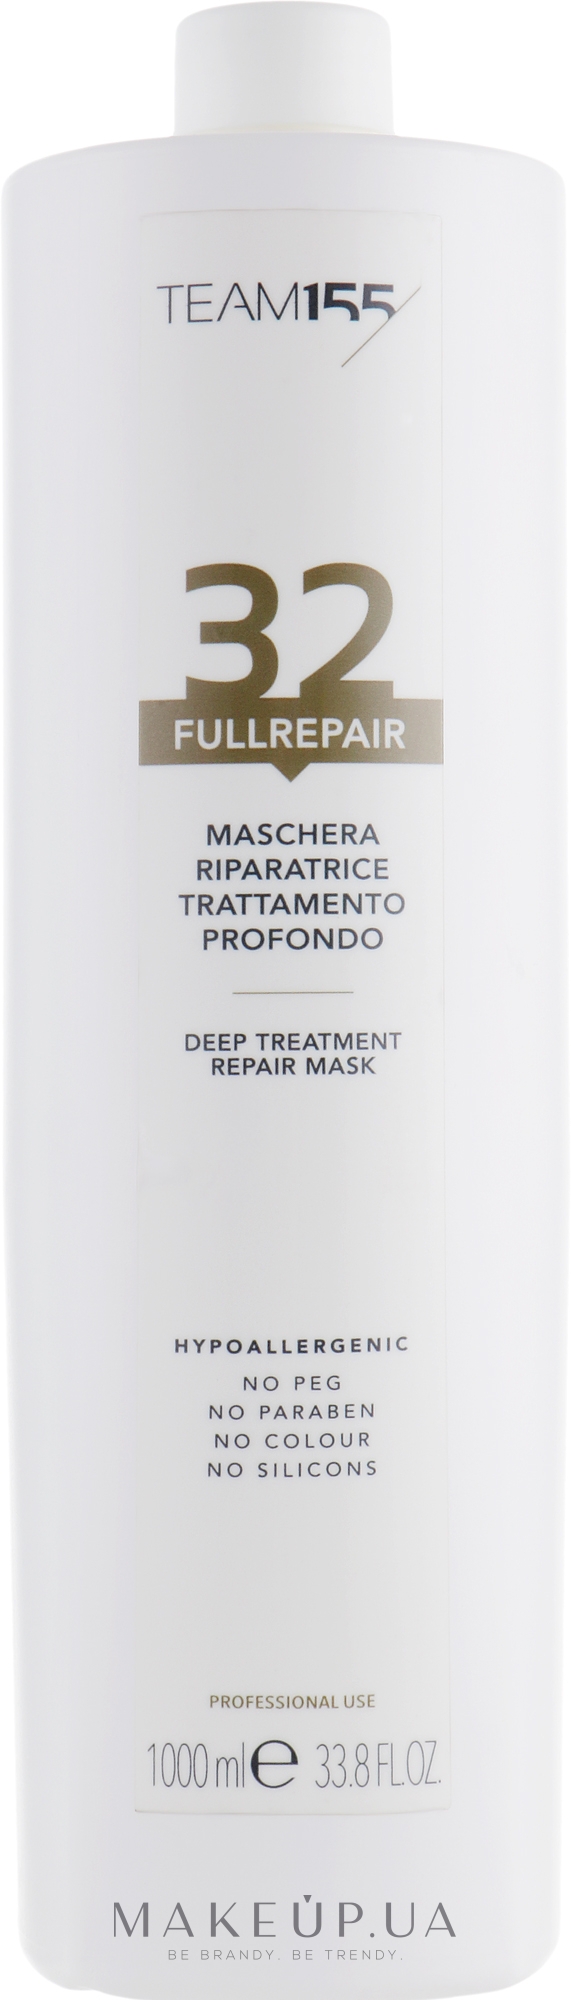 Маска глубокого восстановления волос - Team 155 Fullrepair 32 Mask — фото 1000ml